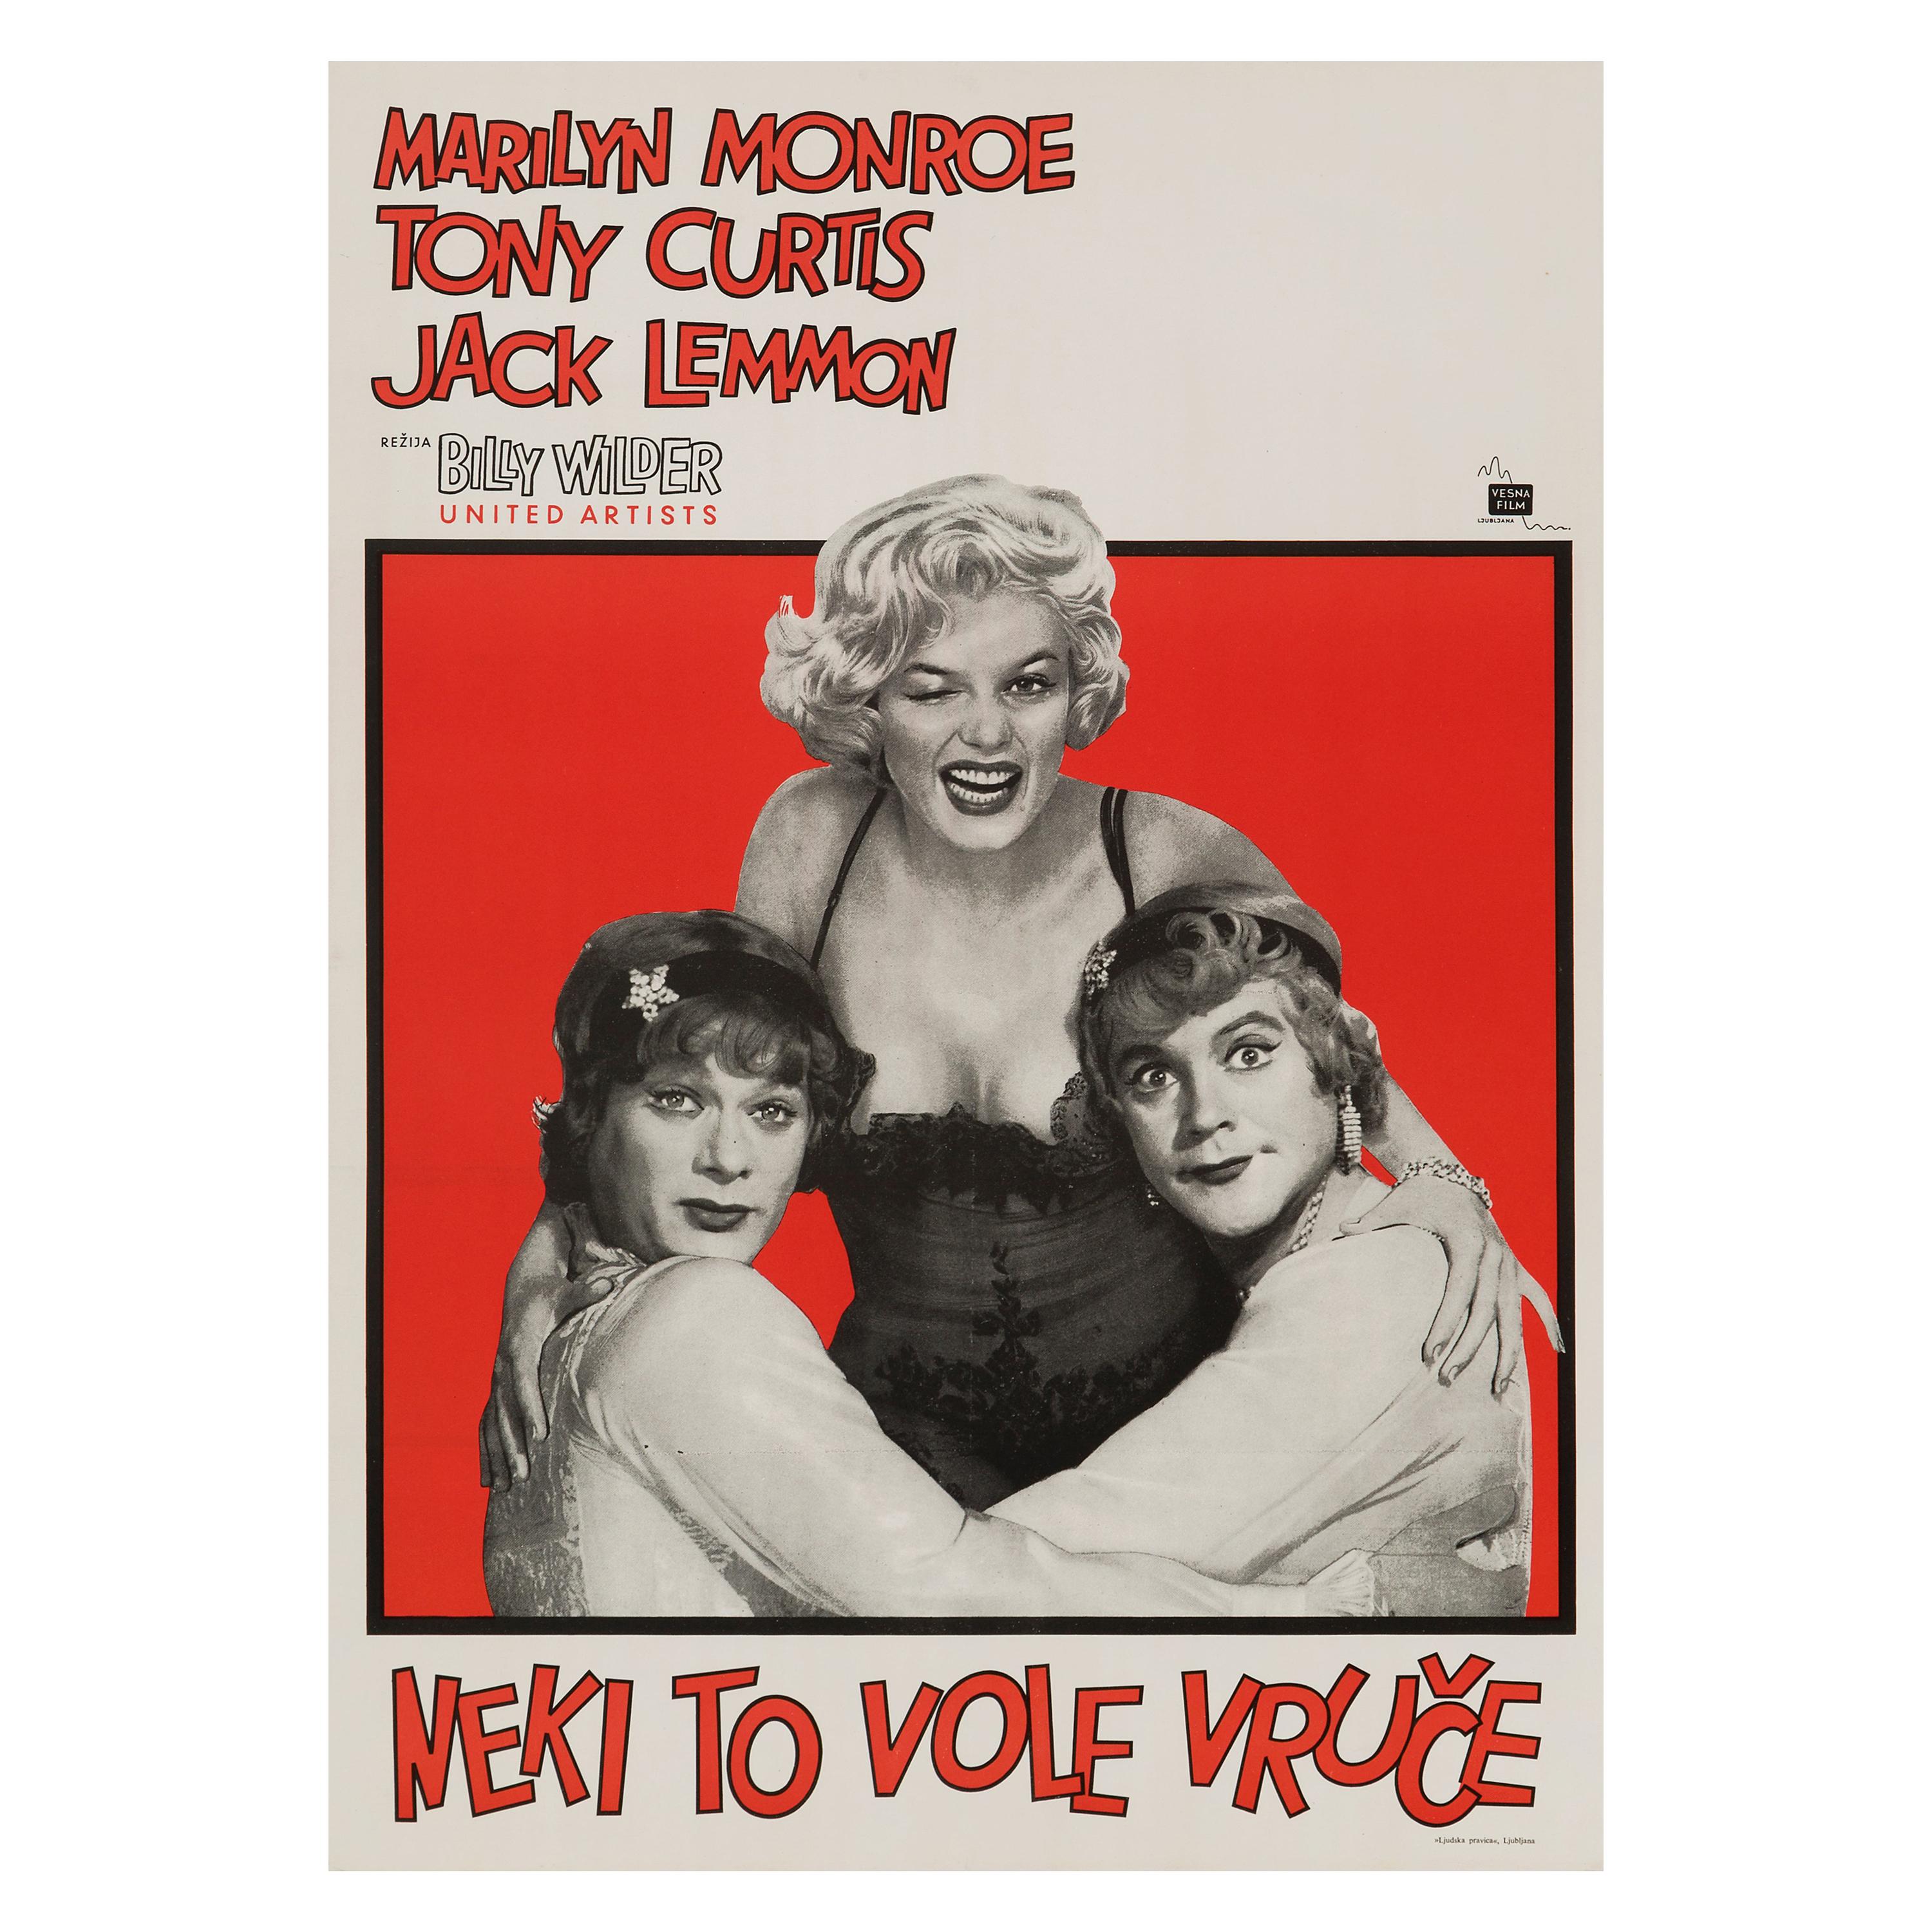 Marilyn Monroe 'Some Like It Hot' Original Vintage Movie Poster, 1959